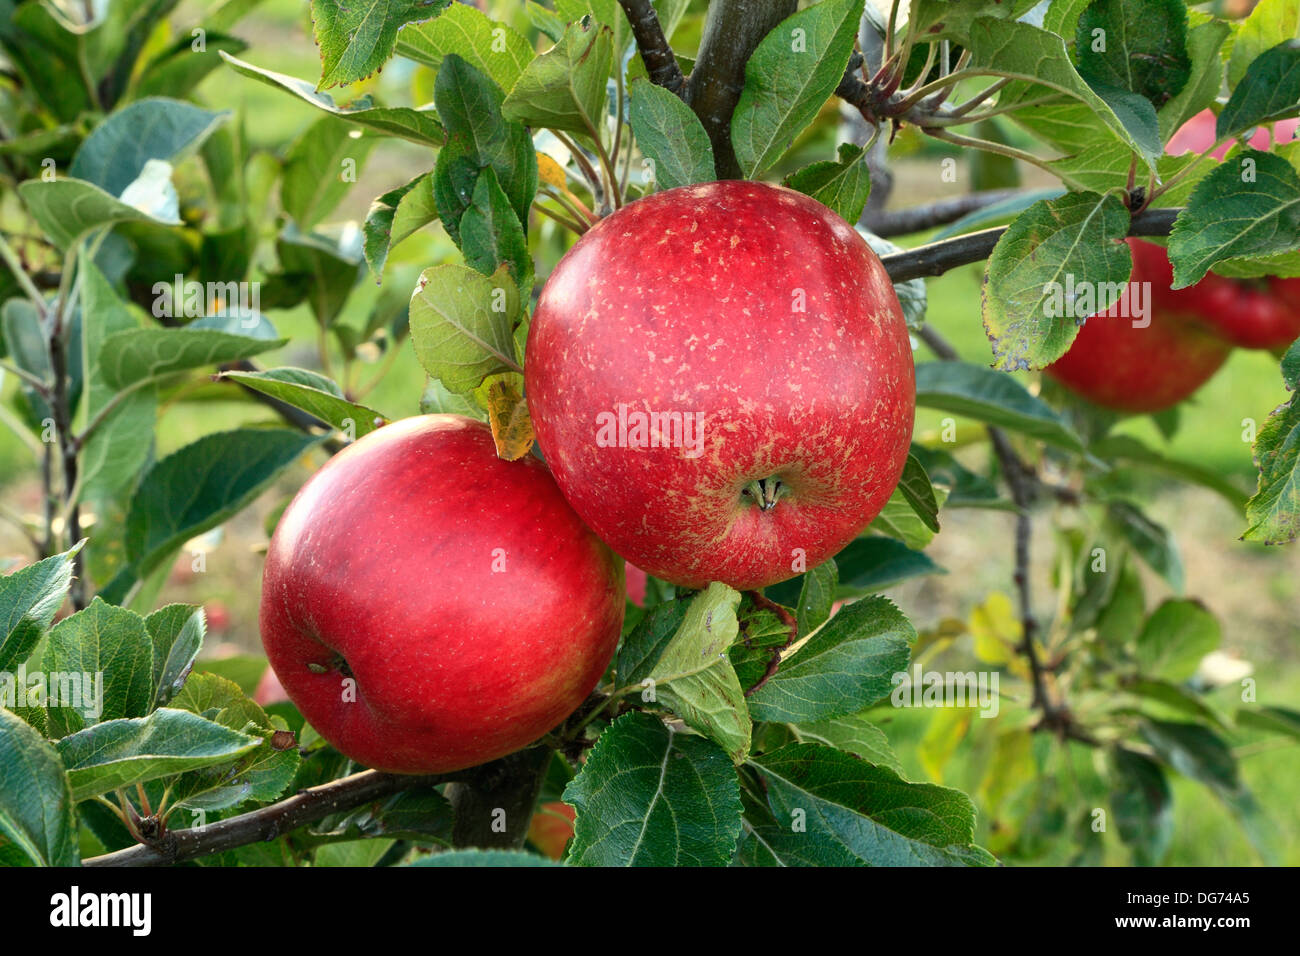 Apple 'Clopton Red', malus domestica, apples variety varieties growing on tree Stock Photo